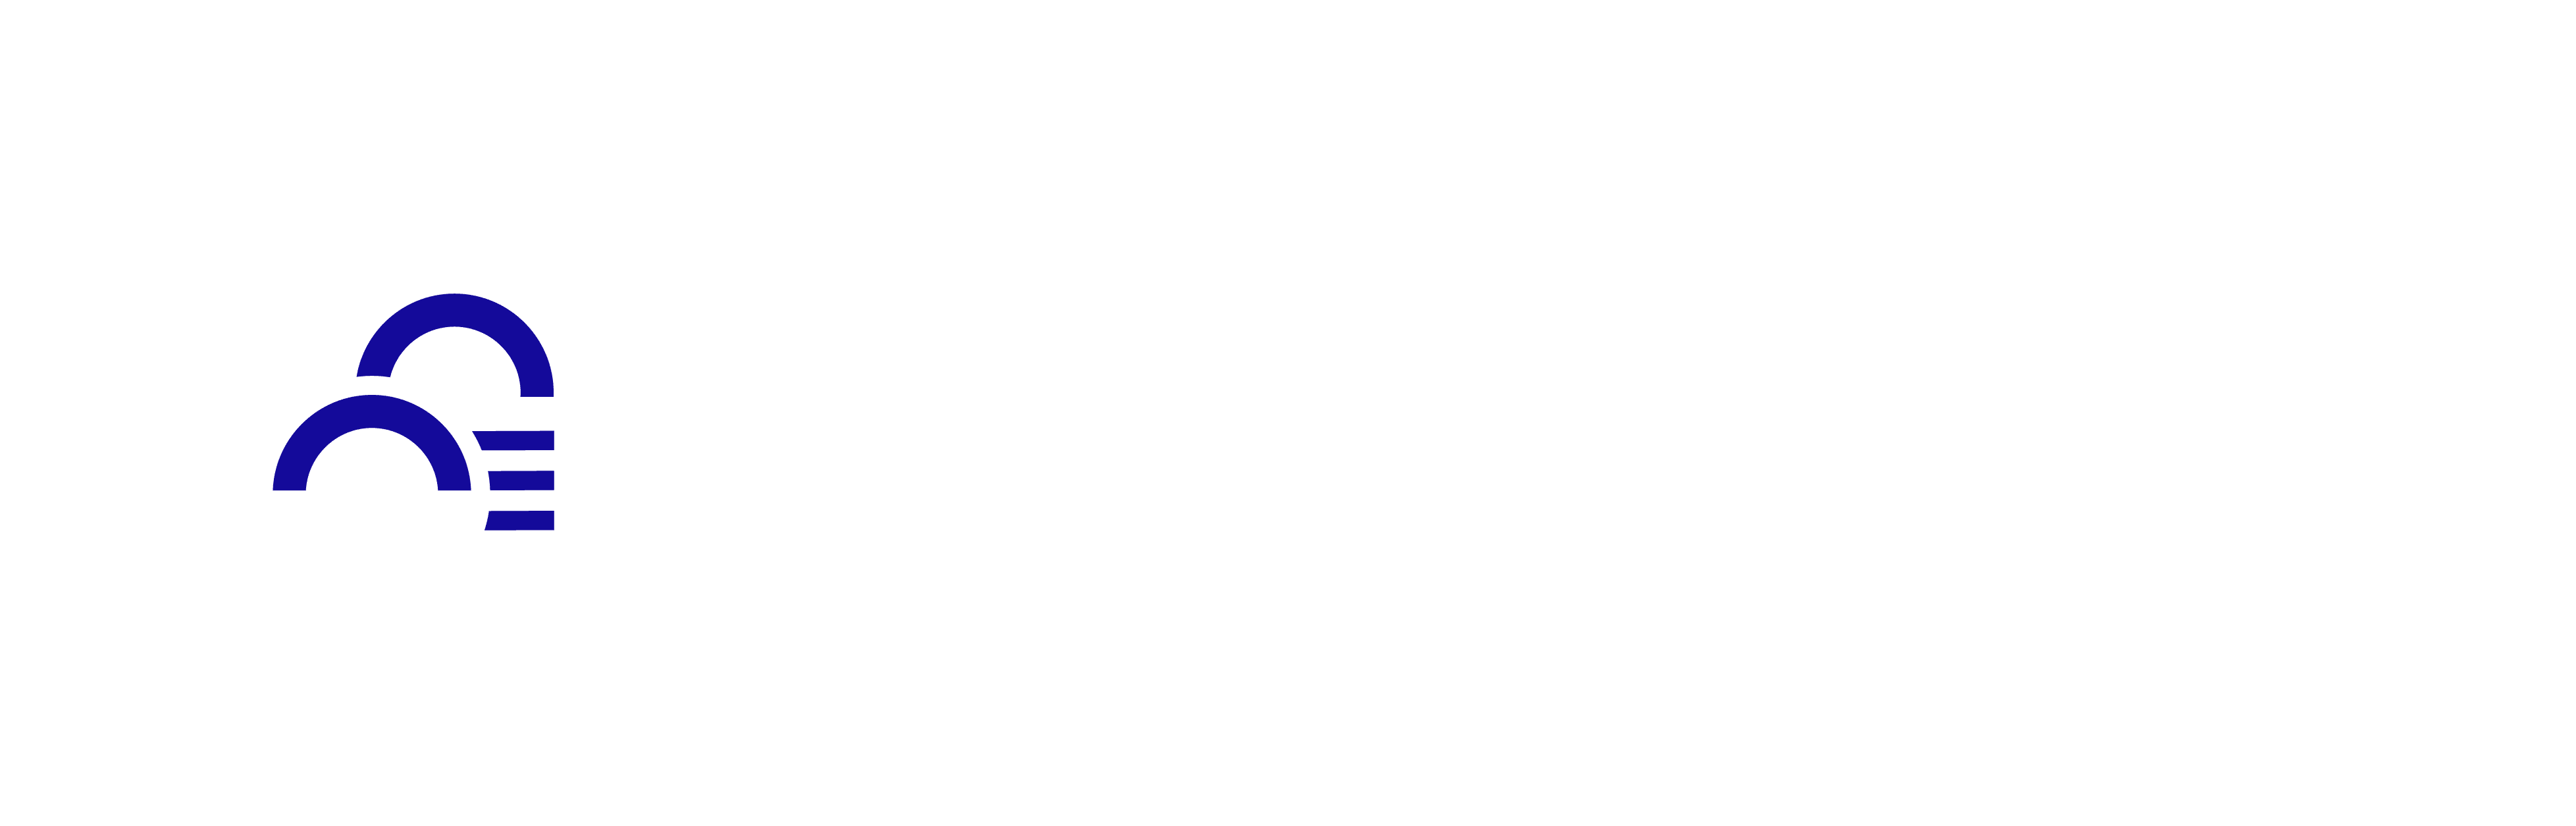 Smart Construction Simulation